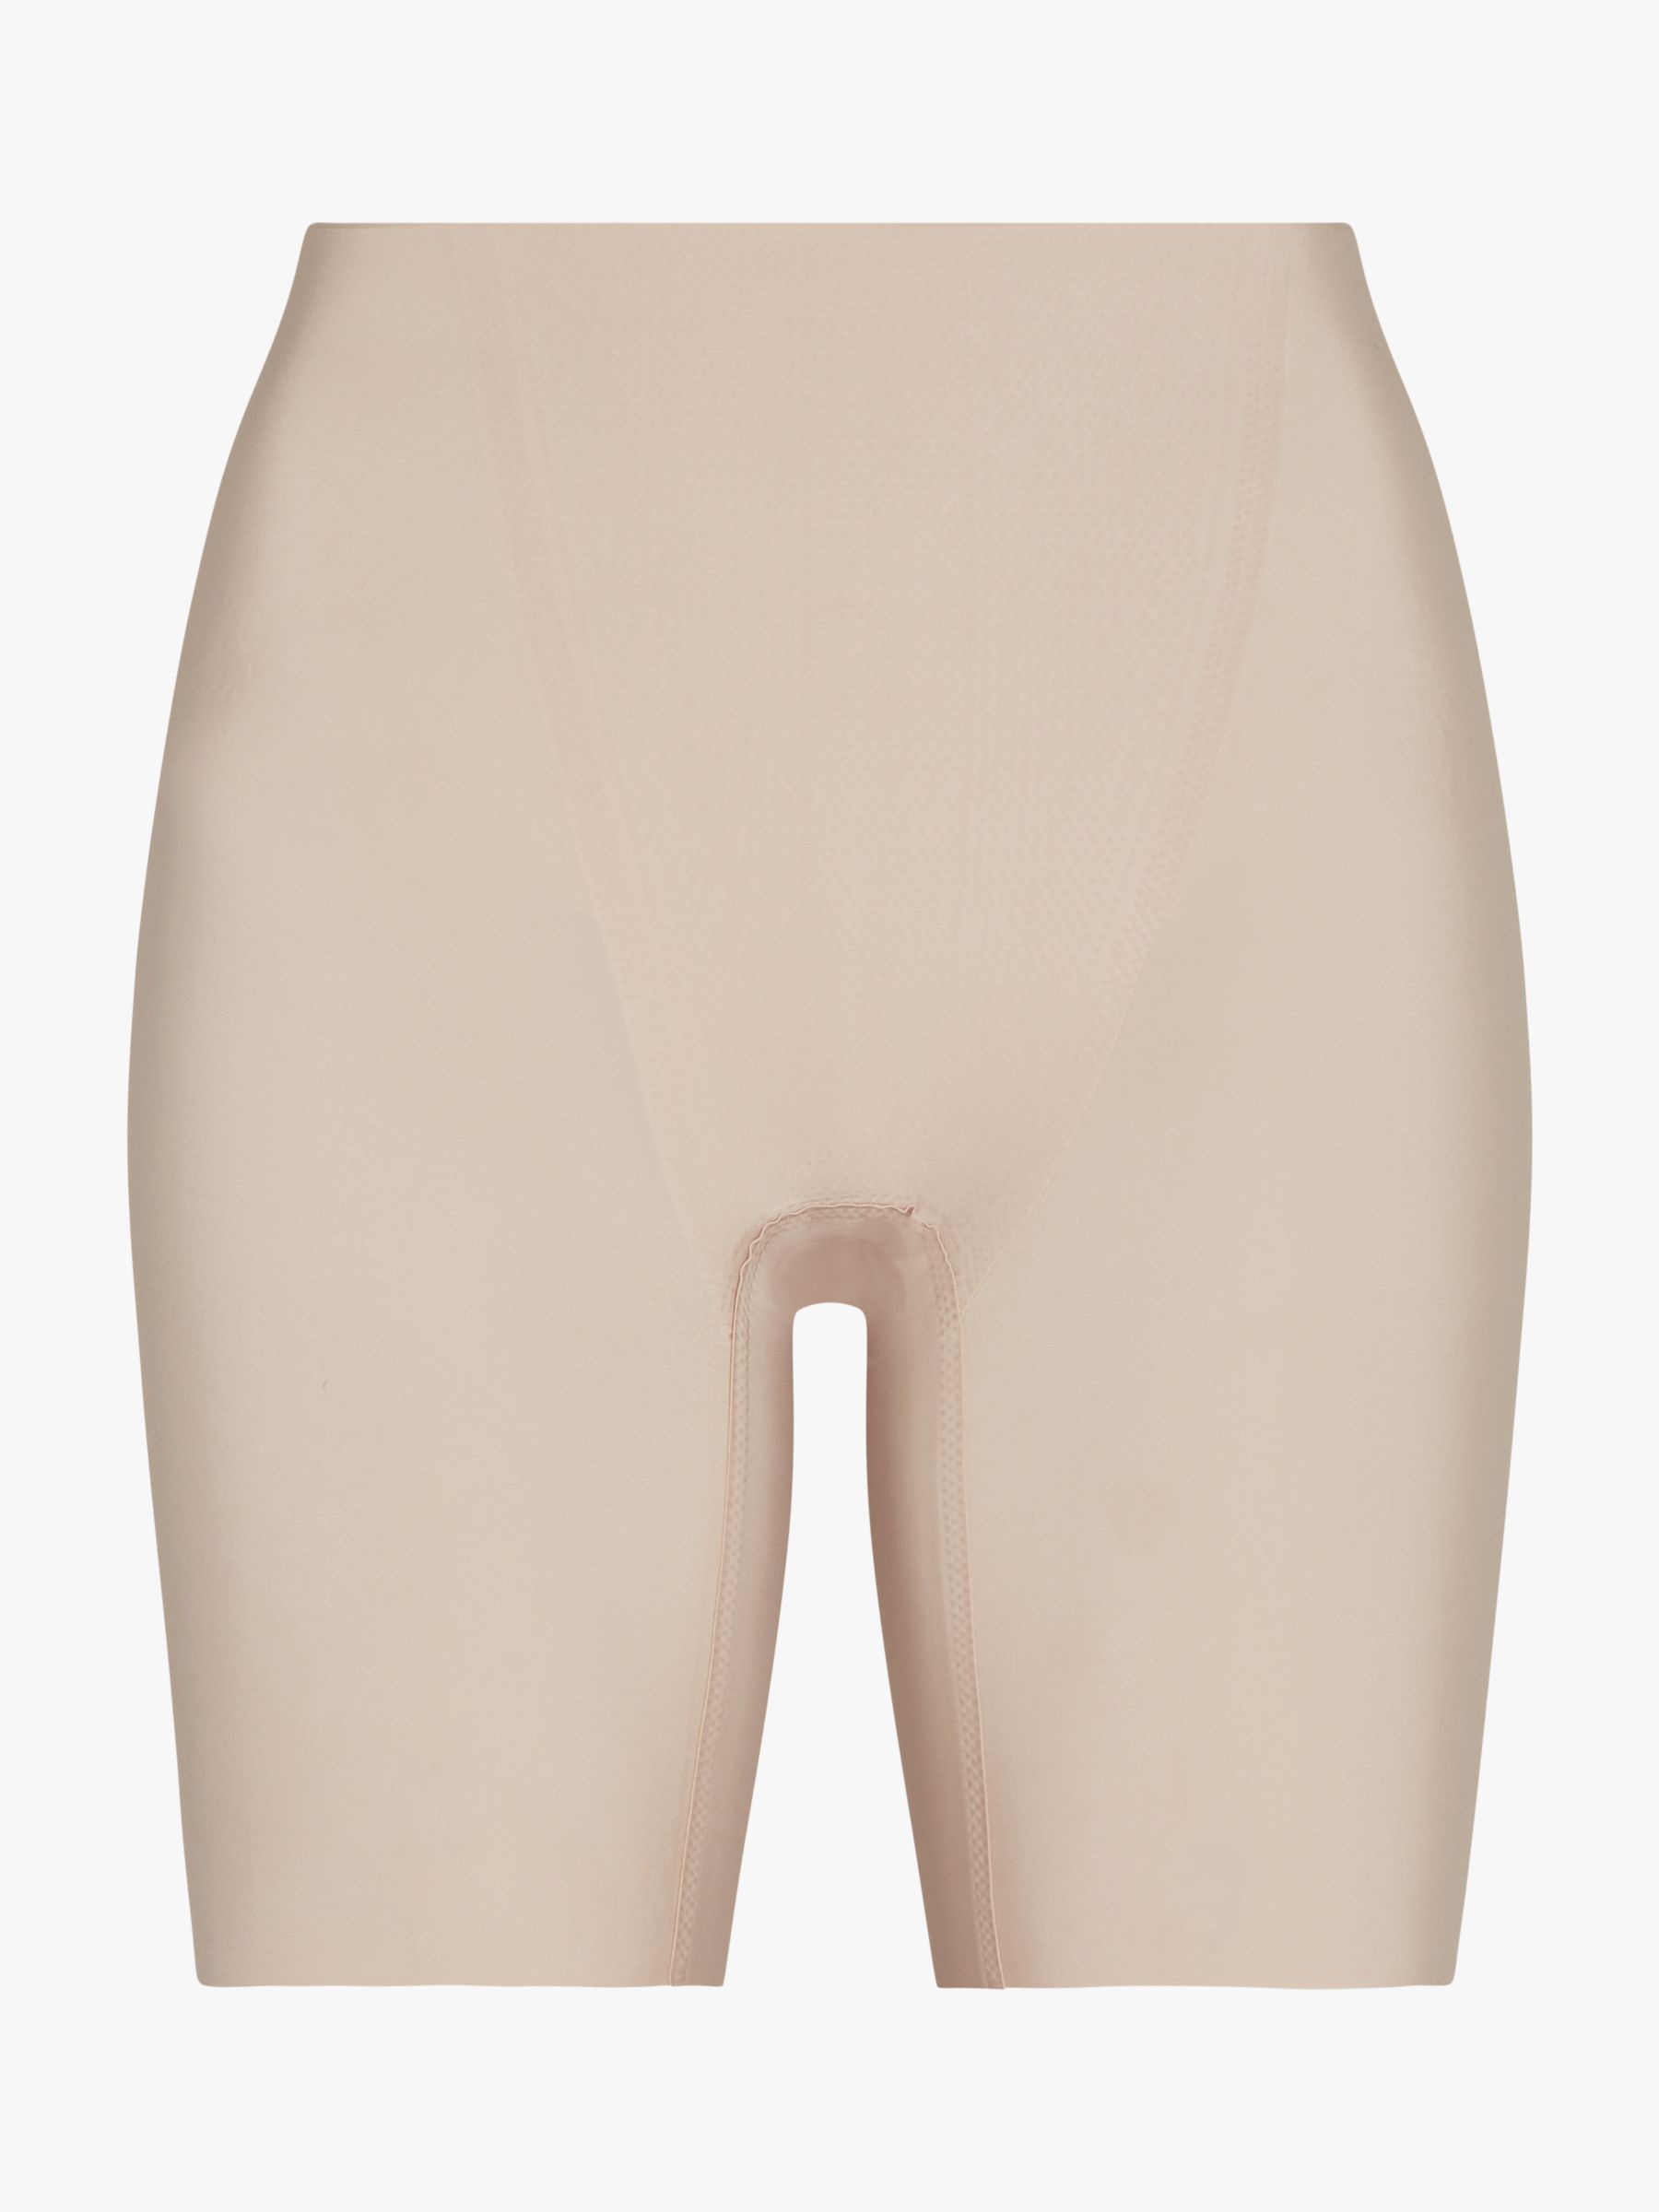 Ambra Power Lite Thigh Shaper Shorts, Beige at John Lewis & Partners